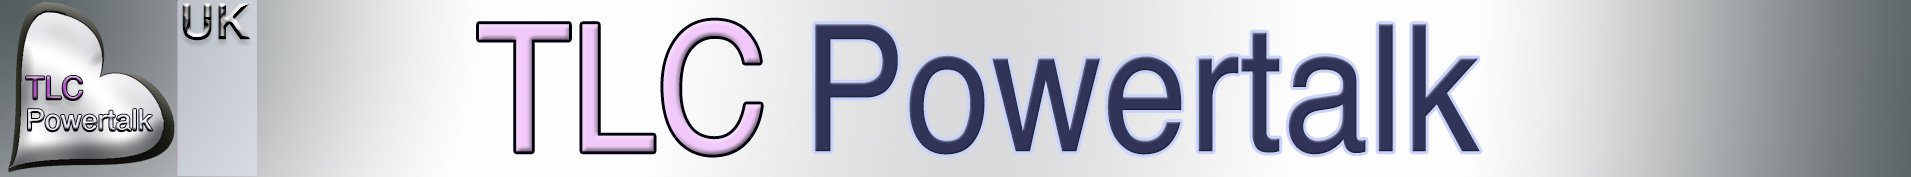 TLC Powertalk logo